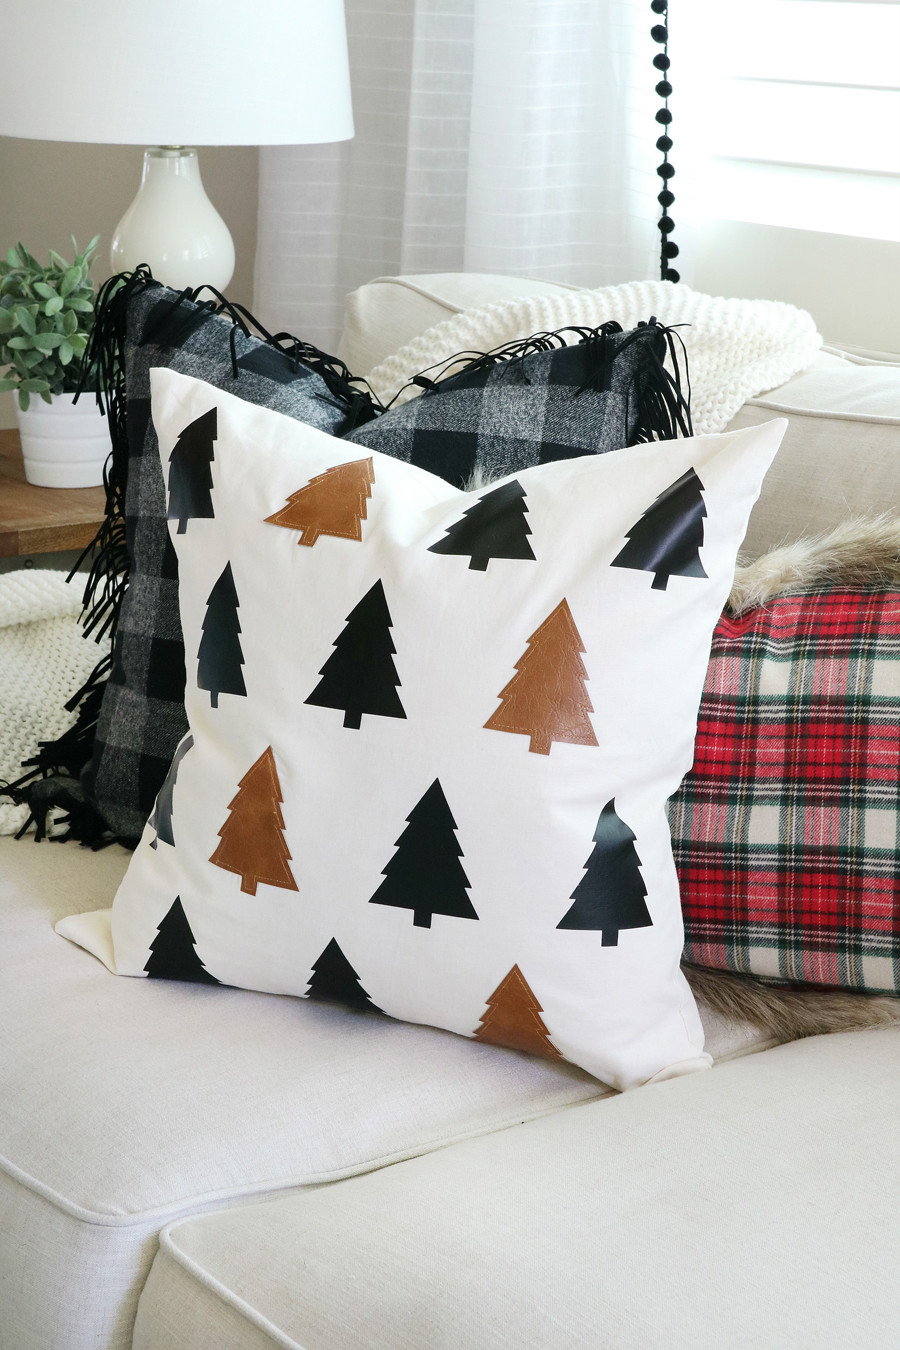 DIY Christmas Pillows
 DIY Faux Leather Christmas Tree Pillow